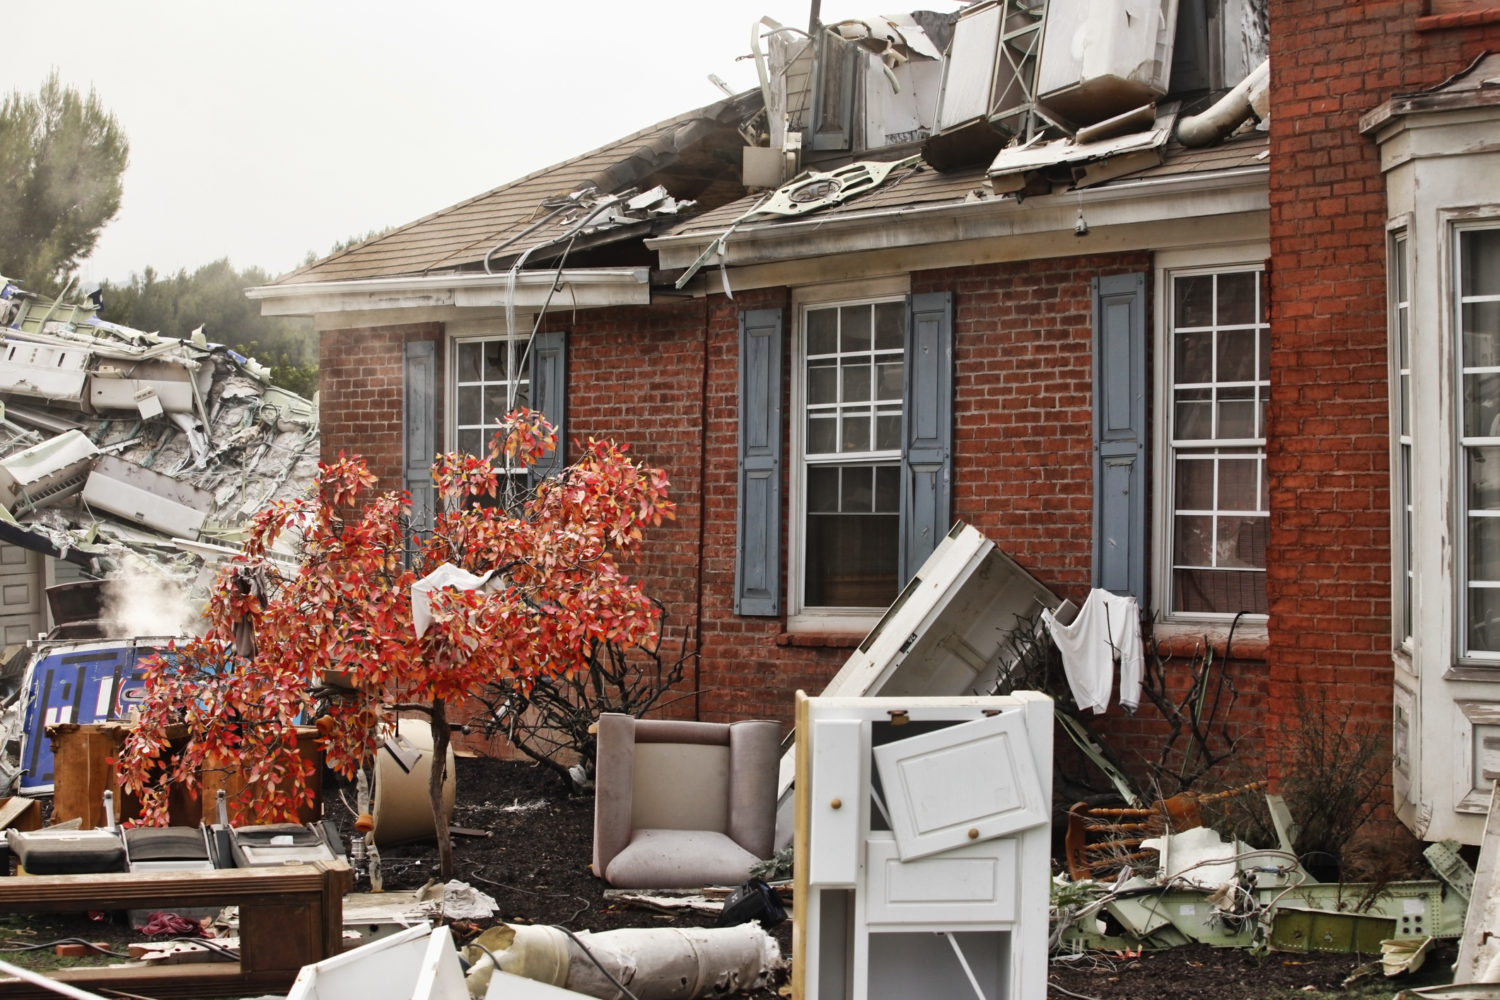 Brick home in Alabama damaged by a tornado and debris.